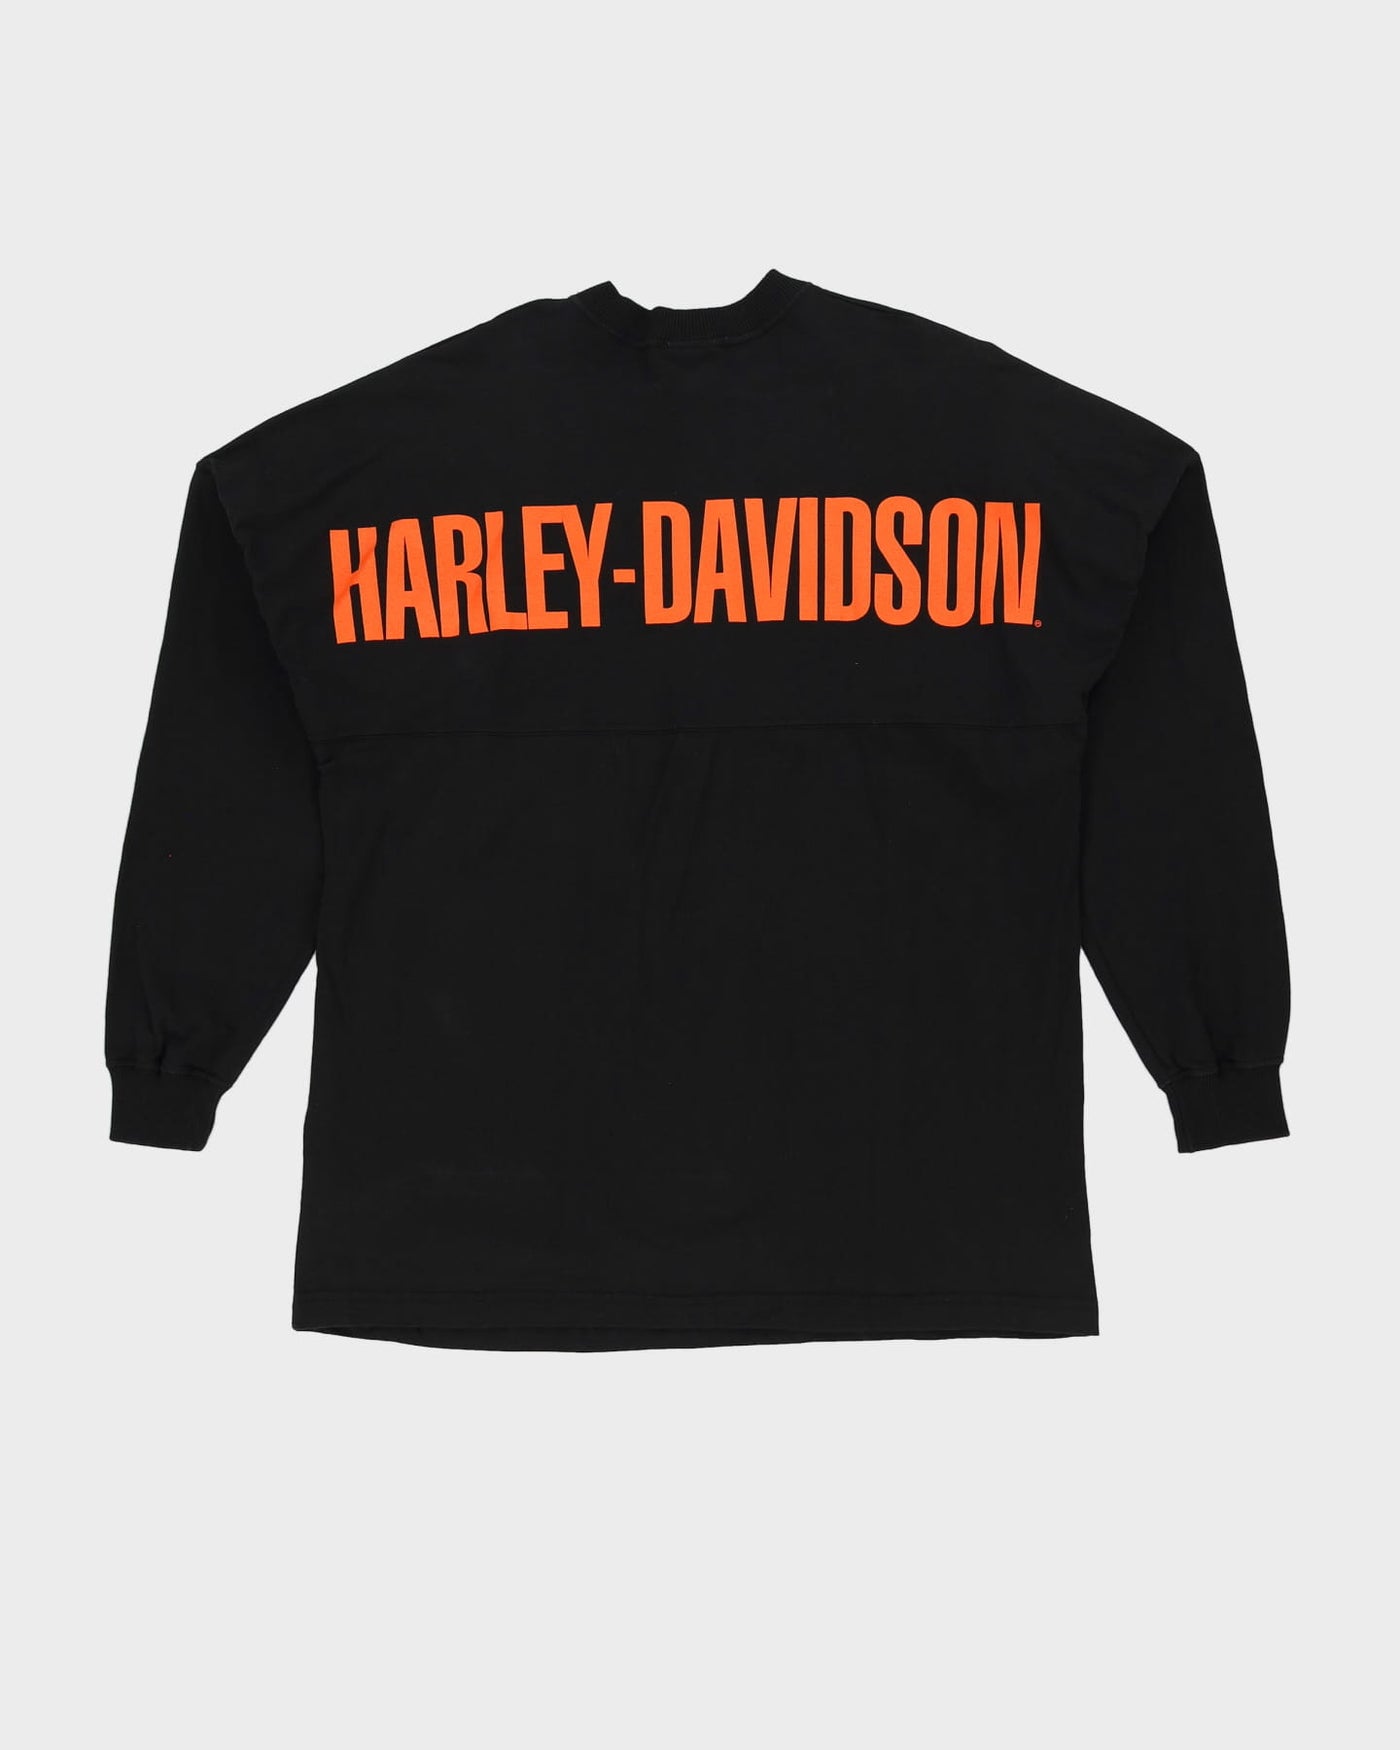 Harley Davidson Black Spell Out Back Print Sweatshirt - XL